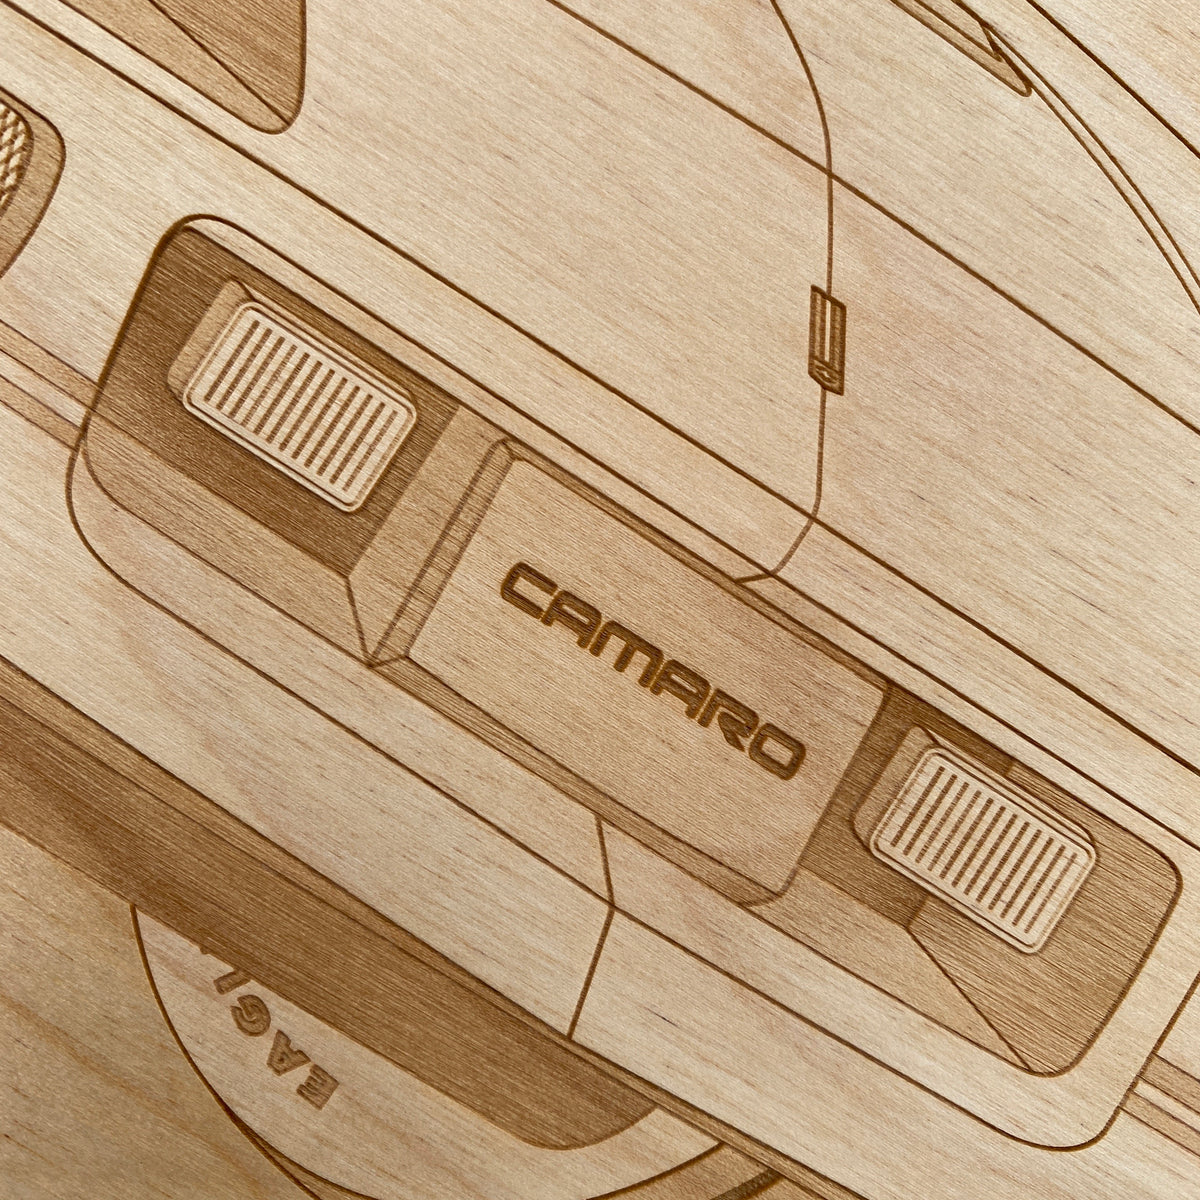 Chevy IROC-Z Camaro Framed Wood Engraved Artwork